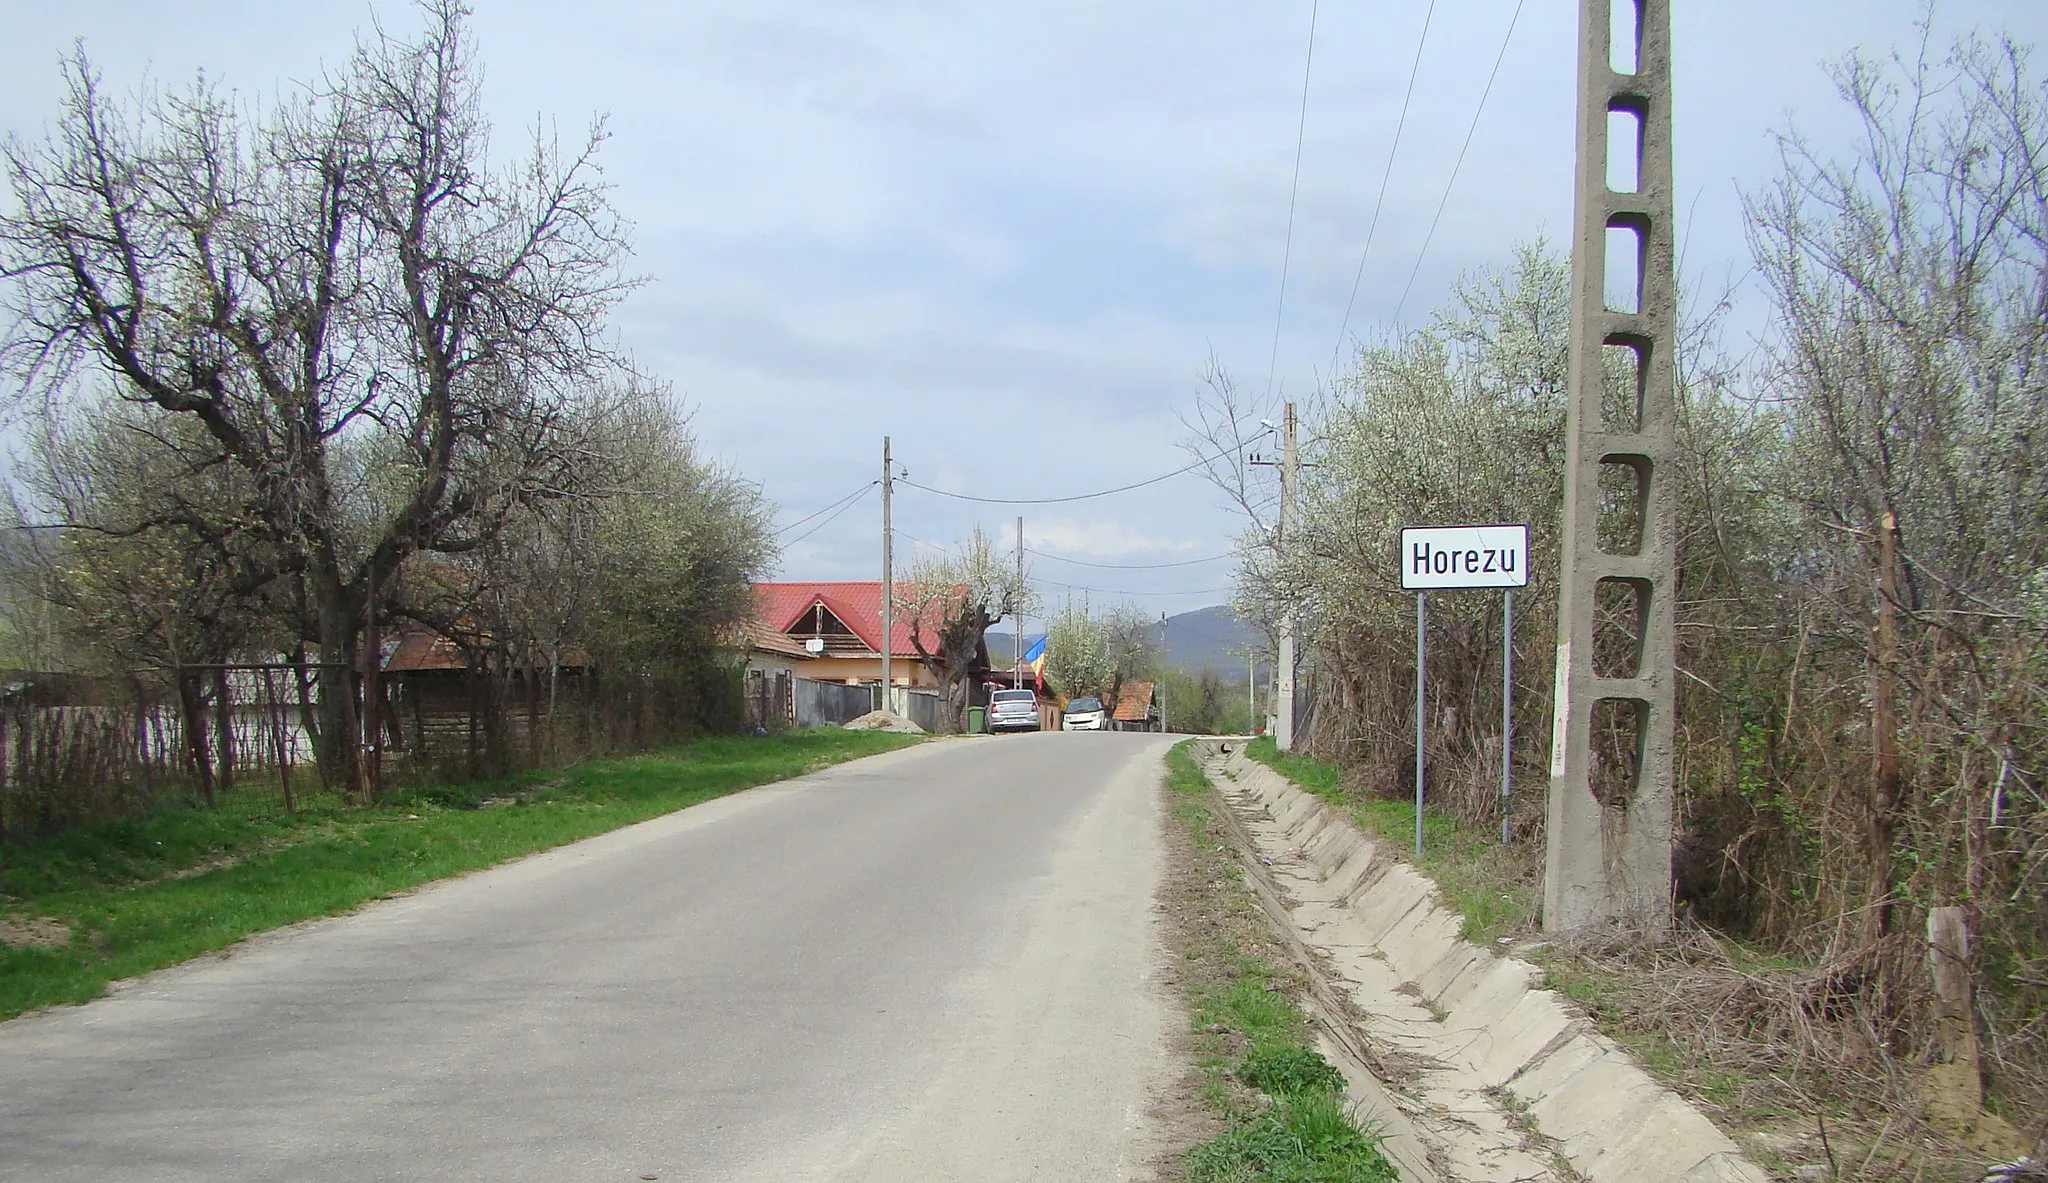 Photo showing: Horezu, Gorj county, Romania